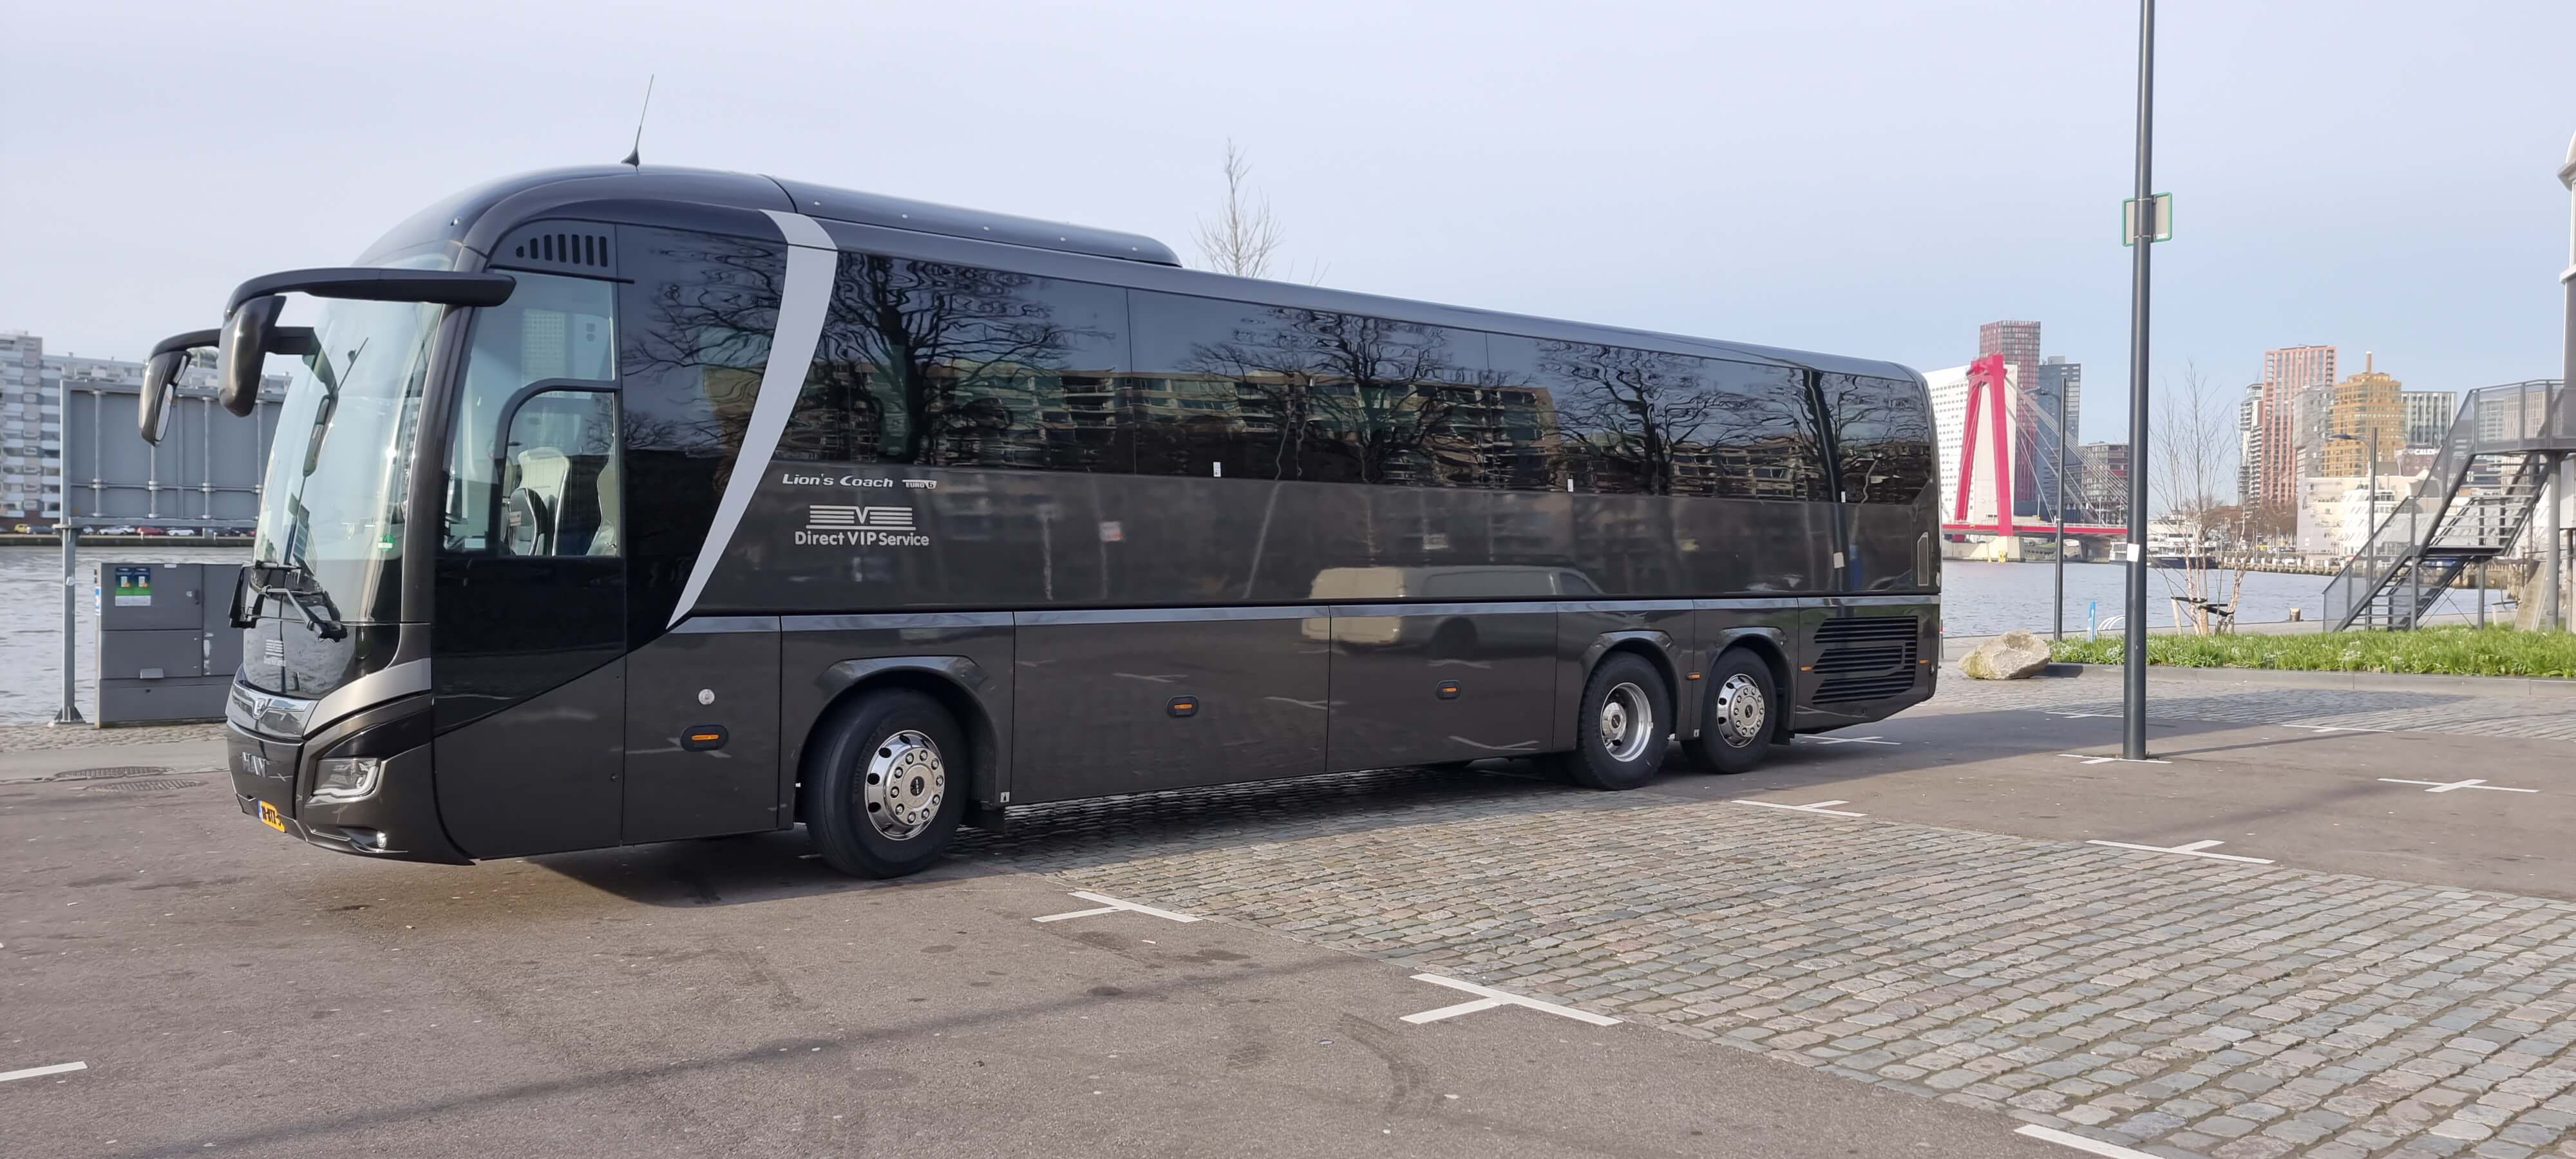 Huur een 53 seater VIP Touringcar (MAN Lion Coach 2018) van Direct Vip Service in Amsterdam 